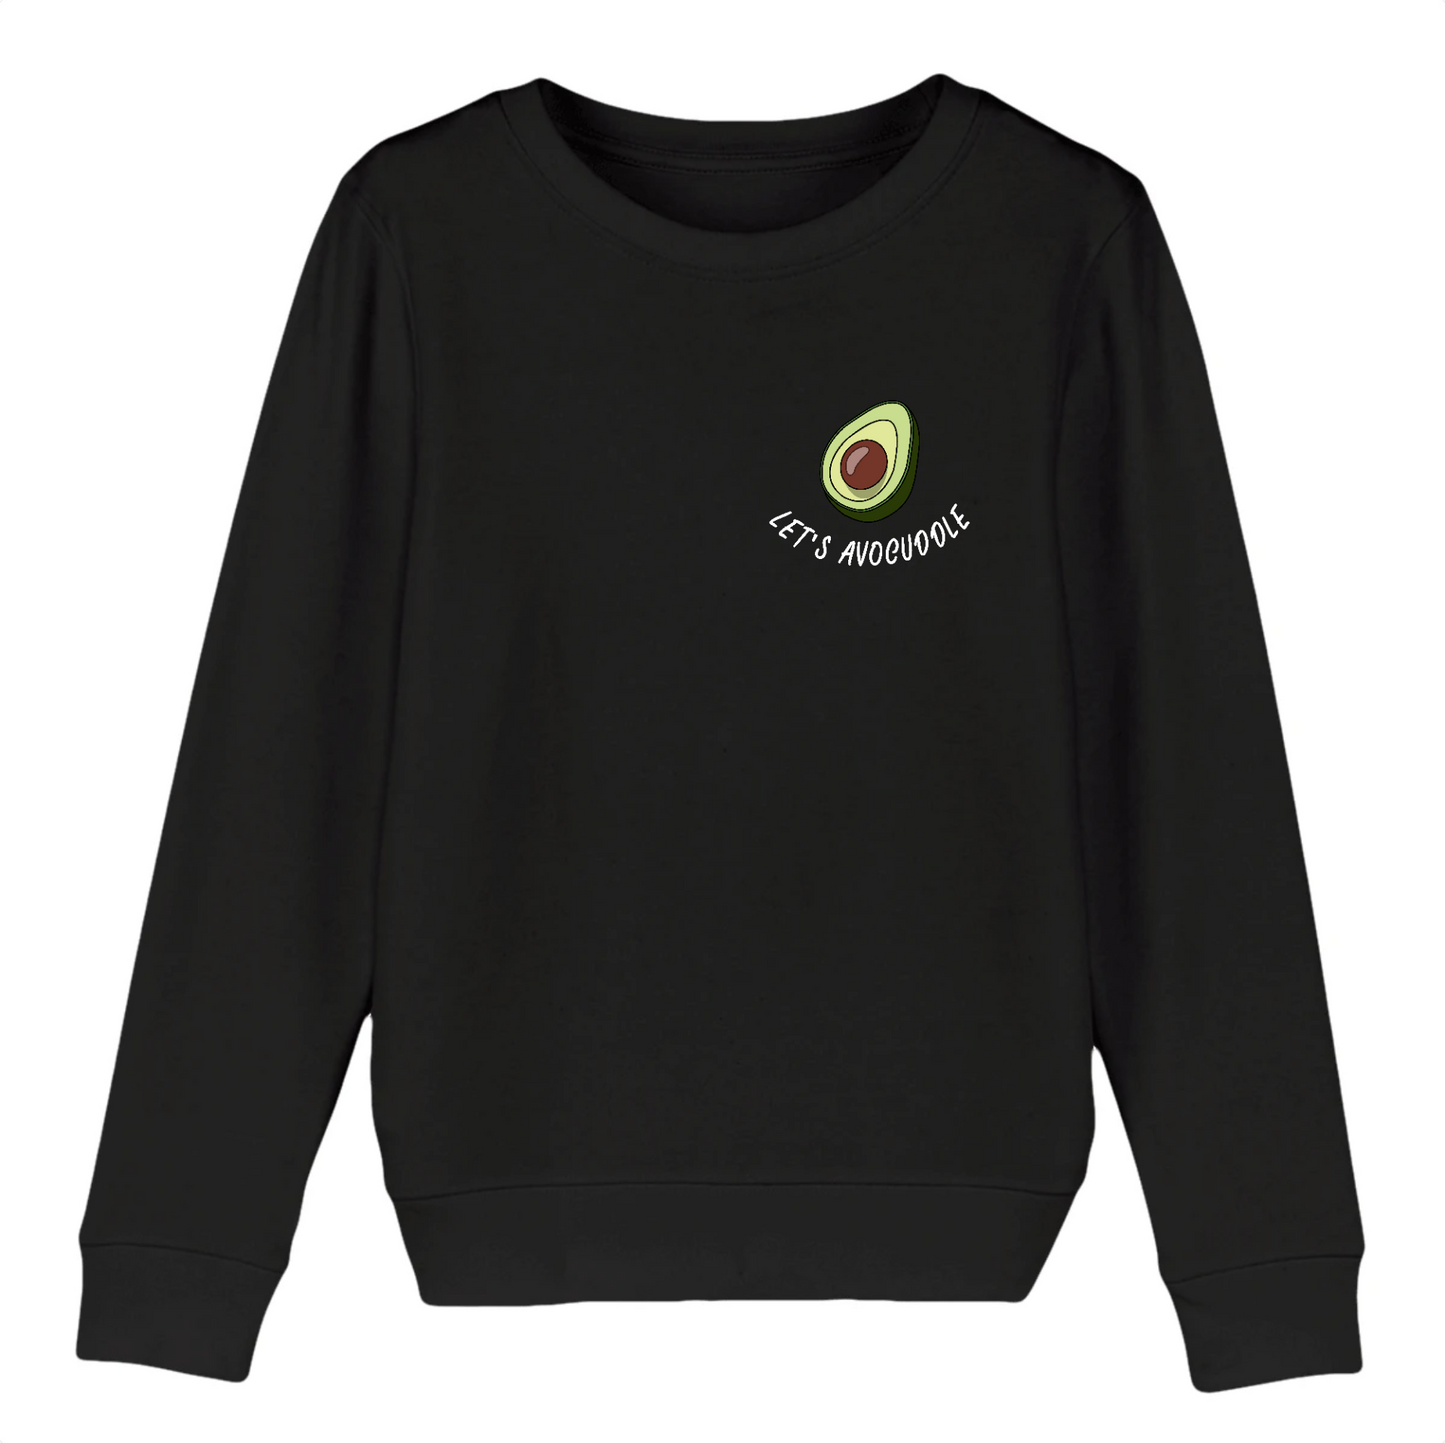 Let's avocuddle - Kid Organic Cotton Sweatshirt